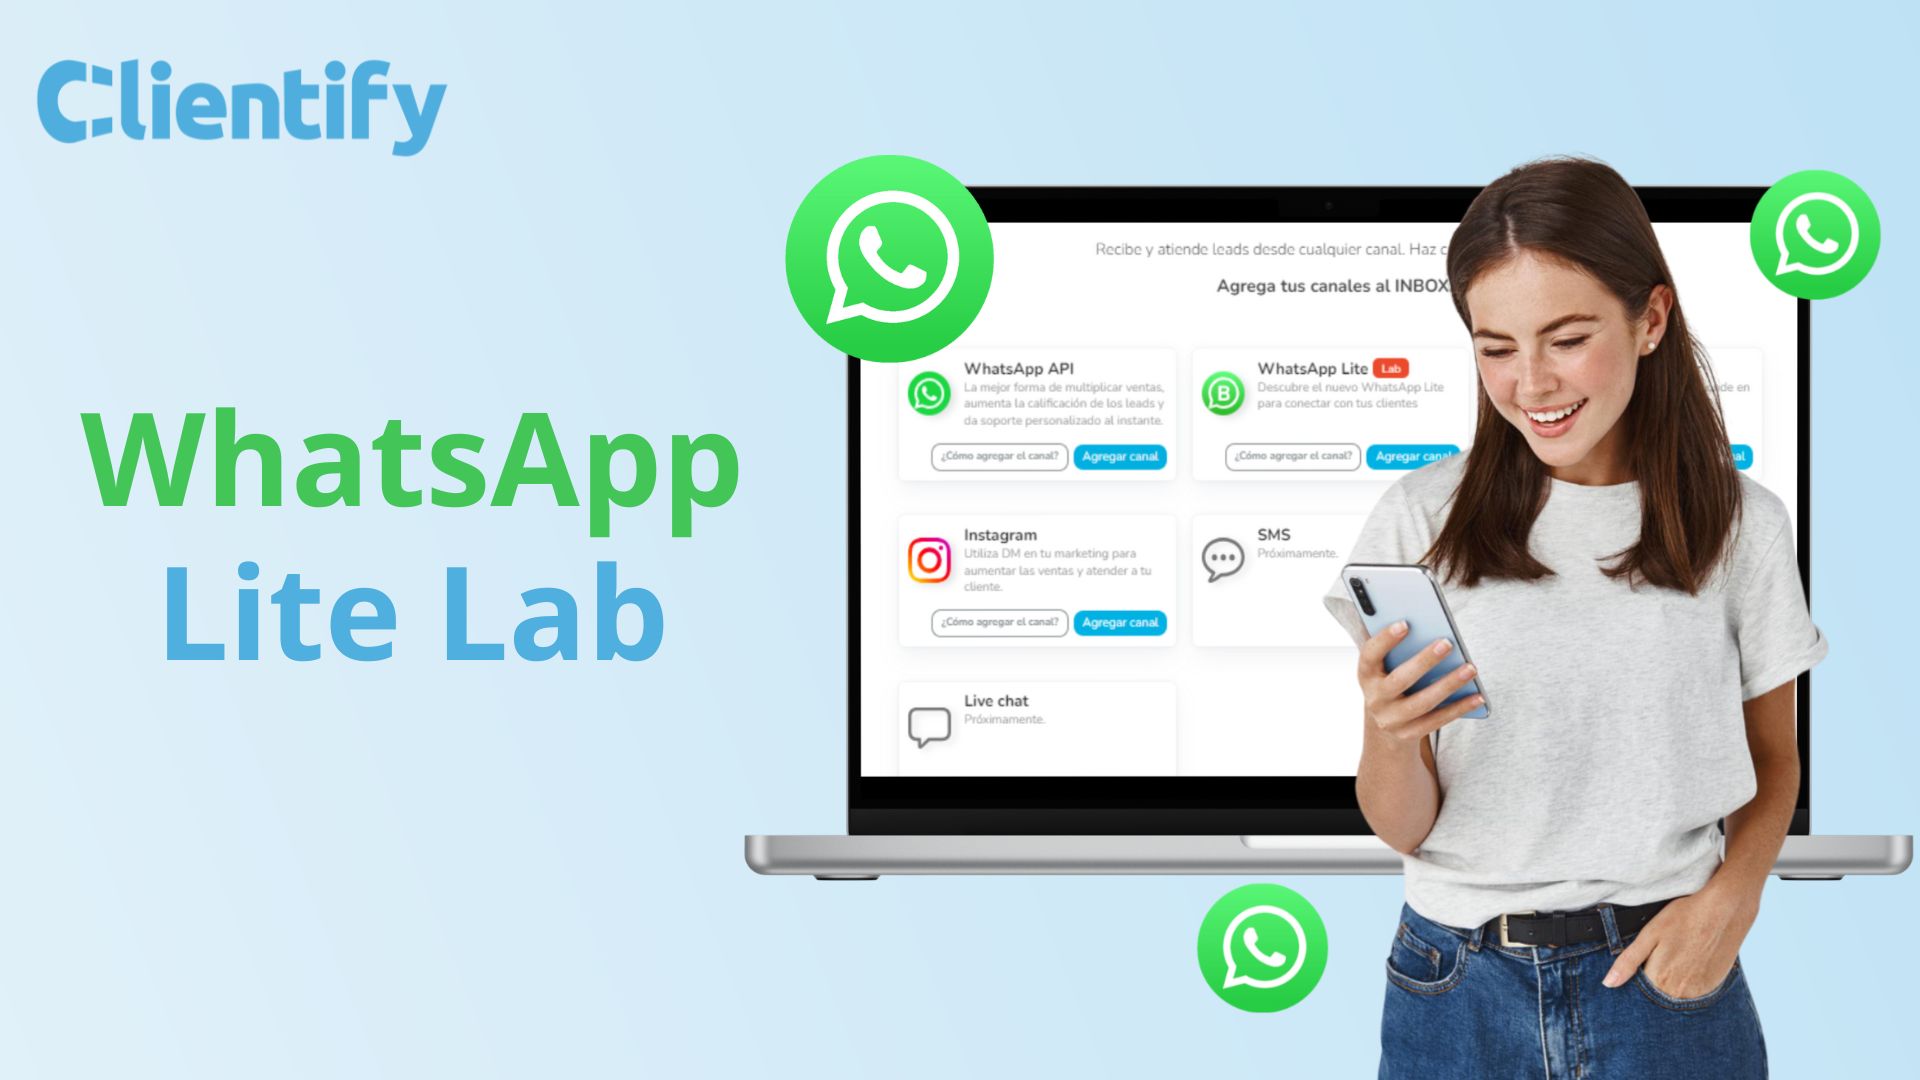 Whatsapp lite lab -Clientify, CRM